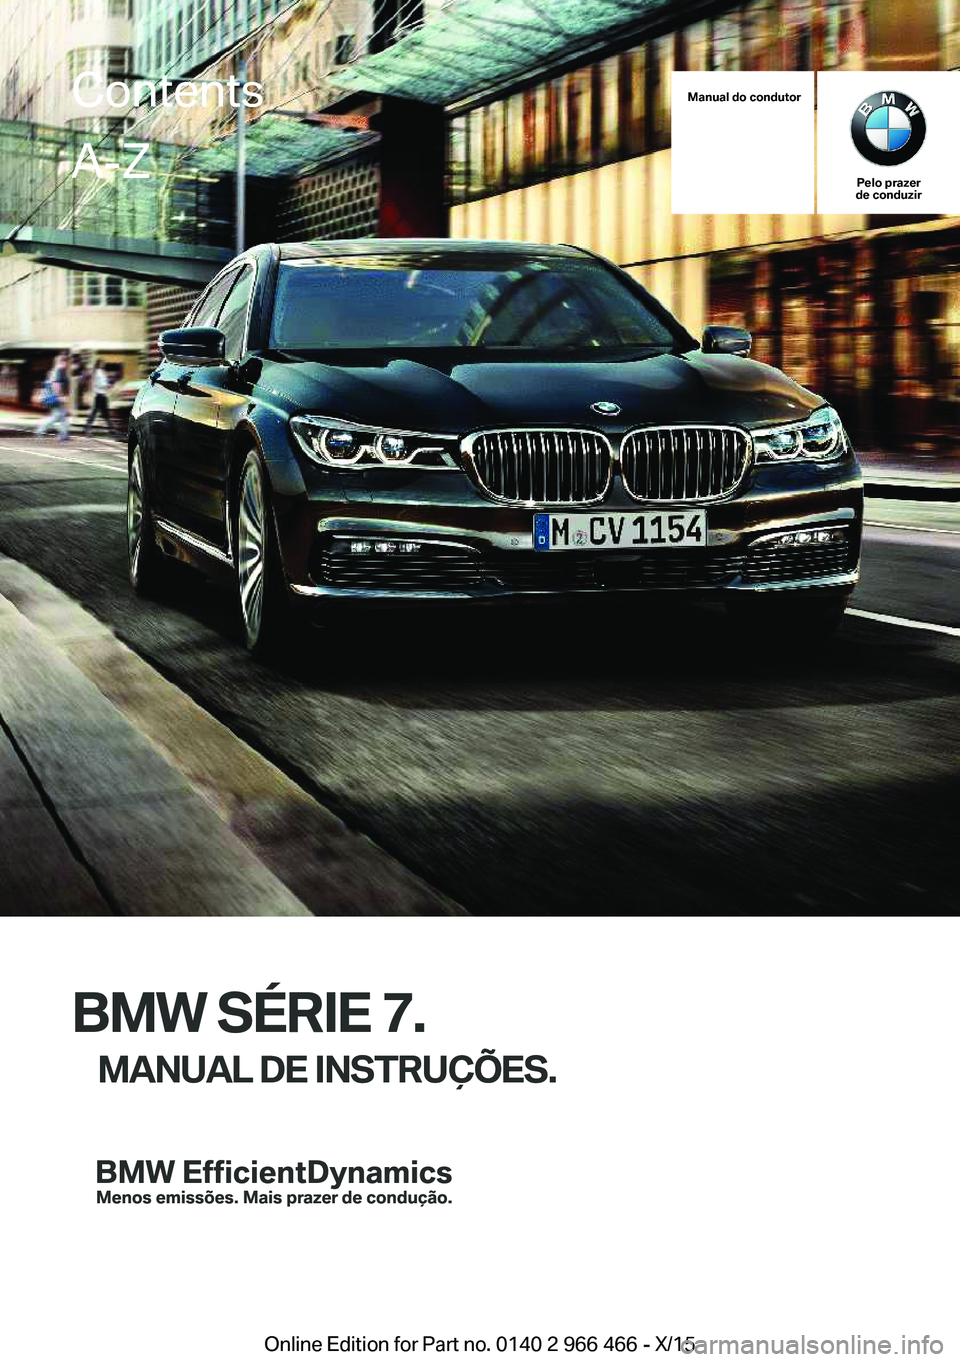 BMW 7 SERIES 2016  Manual do condutor (in Portuguese) Manual do condutor
Pelo prazer
de conduzir
BMW SÉRIE 7.
MANUAL DE INSTRUÇÕES.
ContentsA-Z
Online Edition for Part no. 0140 2 966 466 - X/15   